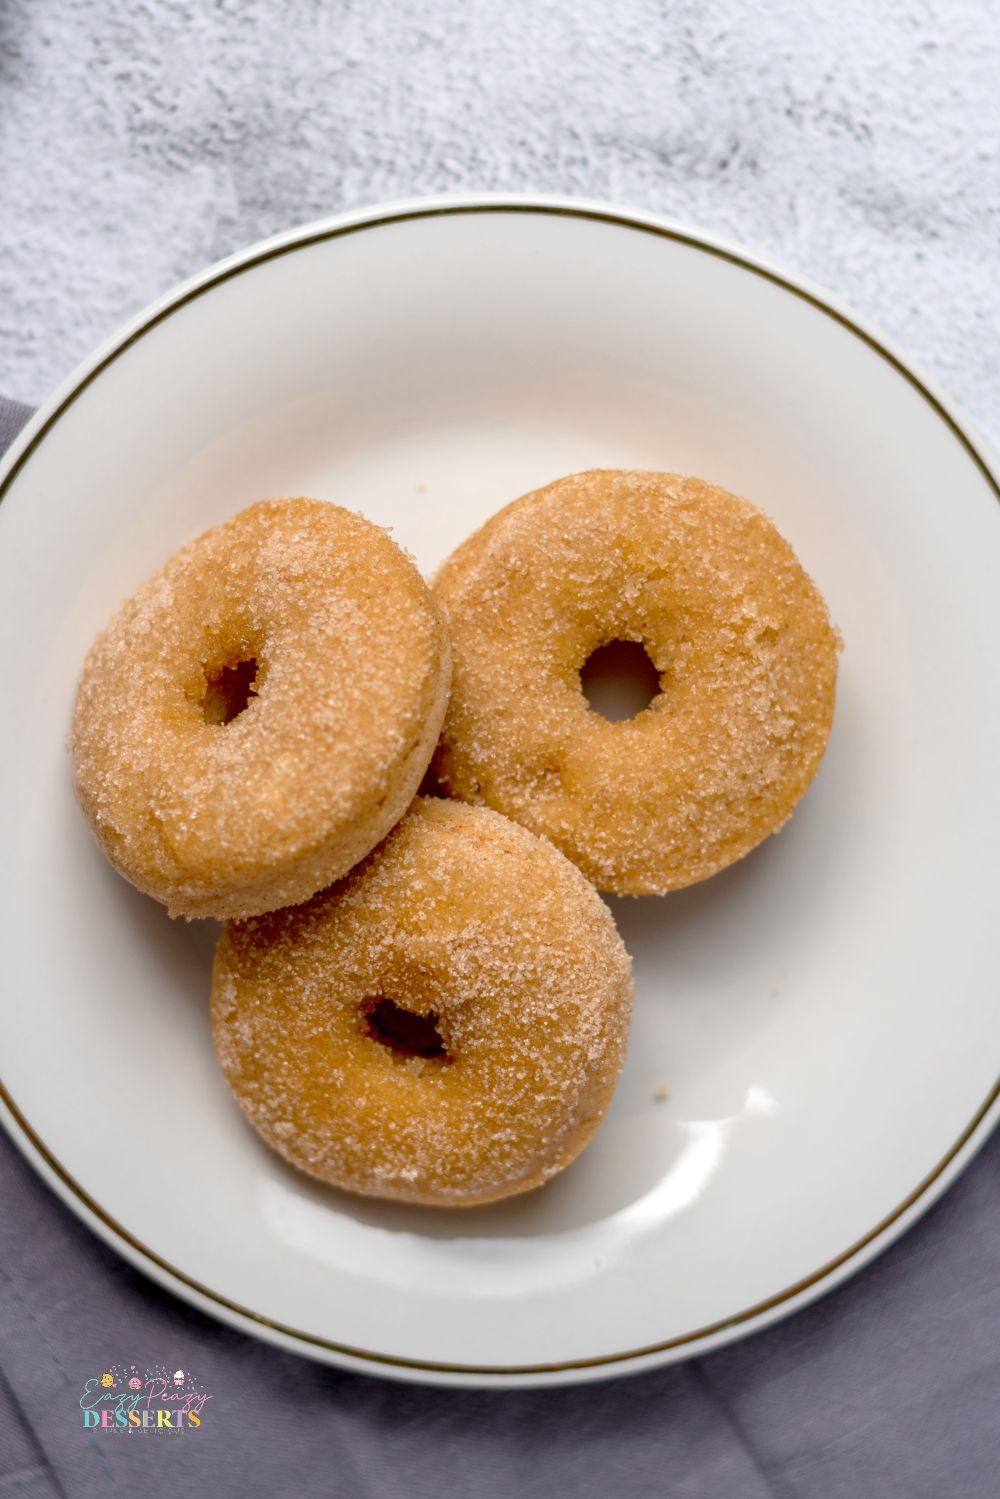 Image of three vegan cinnamon donuts on a desserts plate